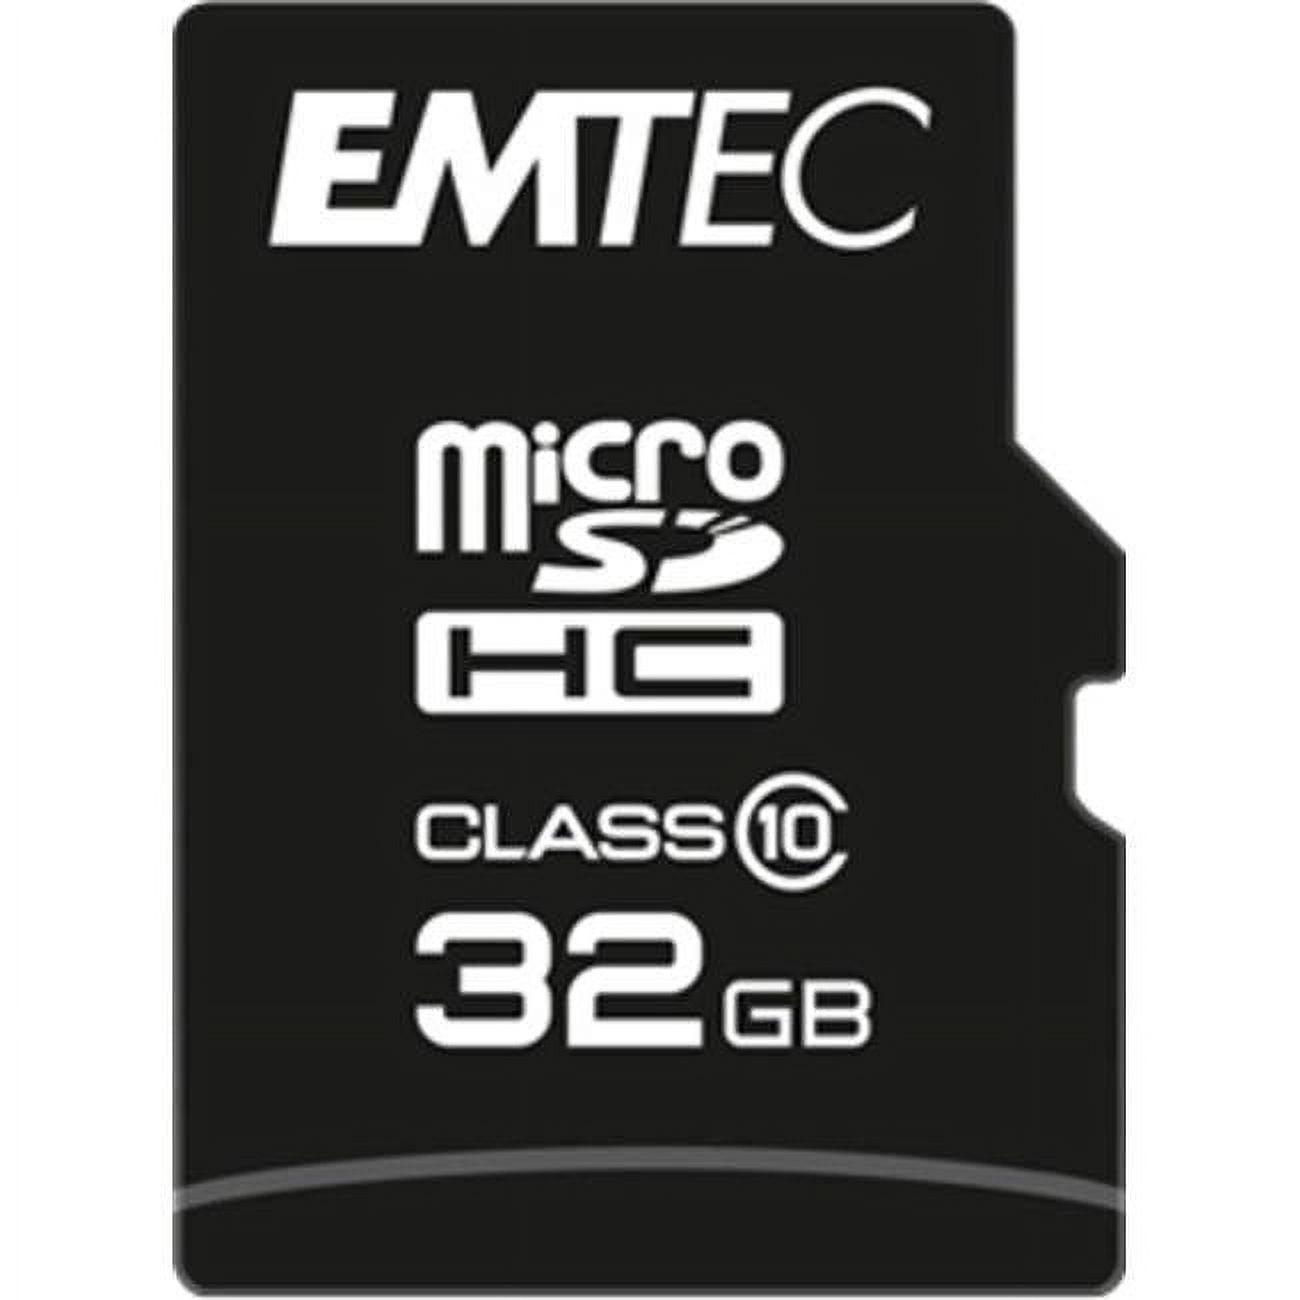 Picture of EMTEC ECMSDM32GHC10CG Micro-SDHC 32GB MicroSD Class 10 Memory Card